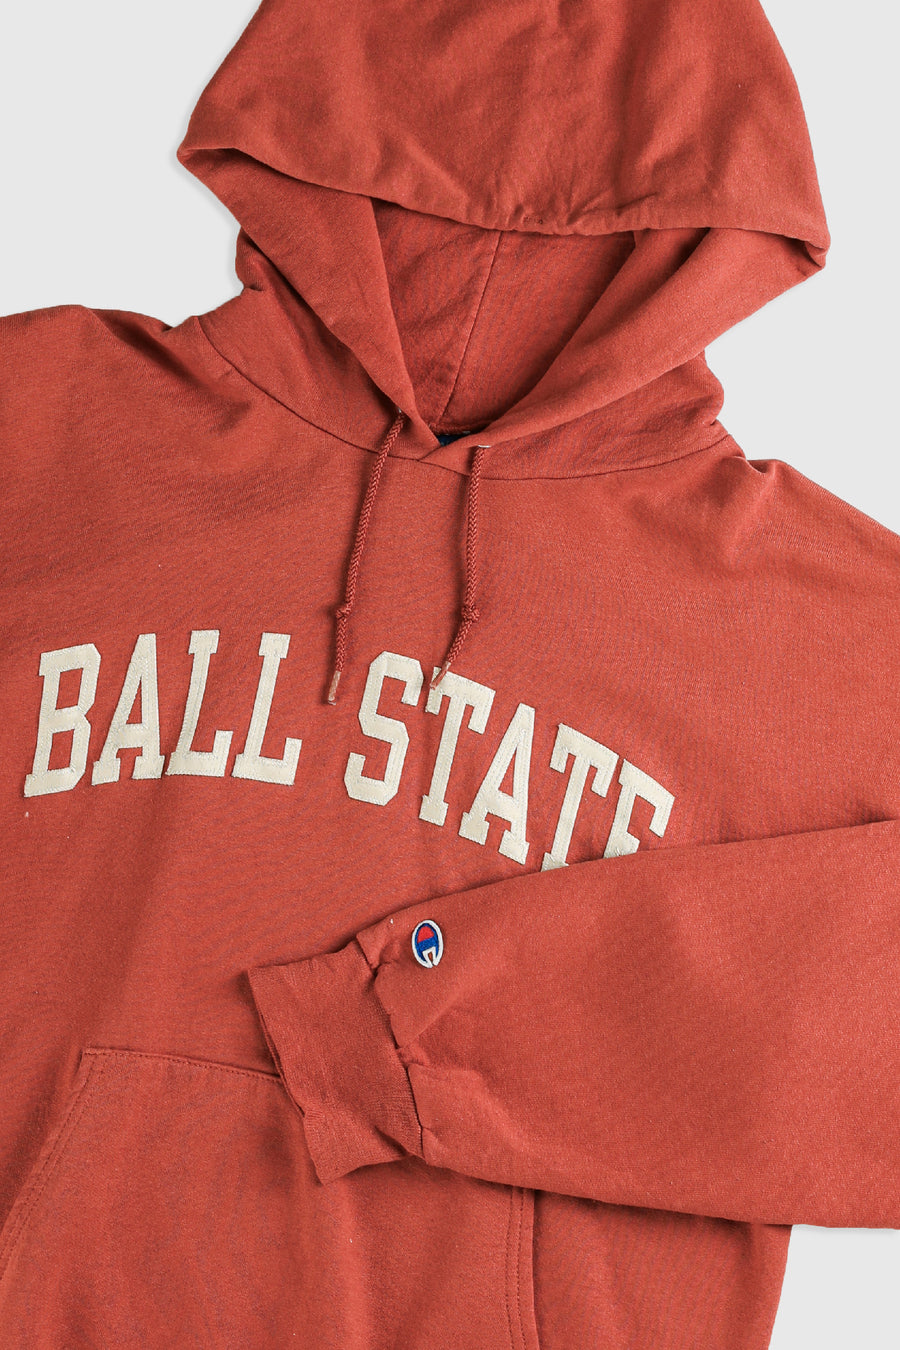 Vintage Ball State Sweatshirt